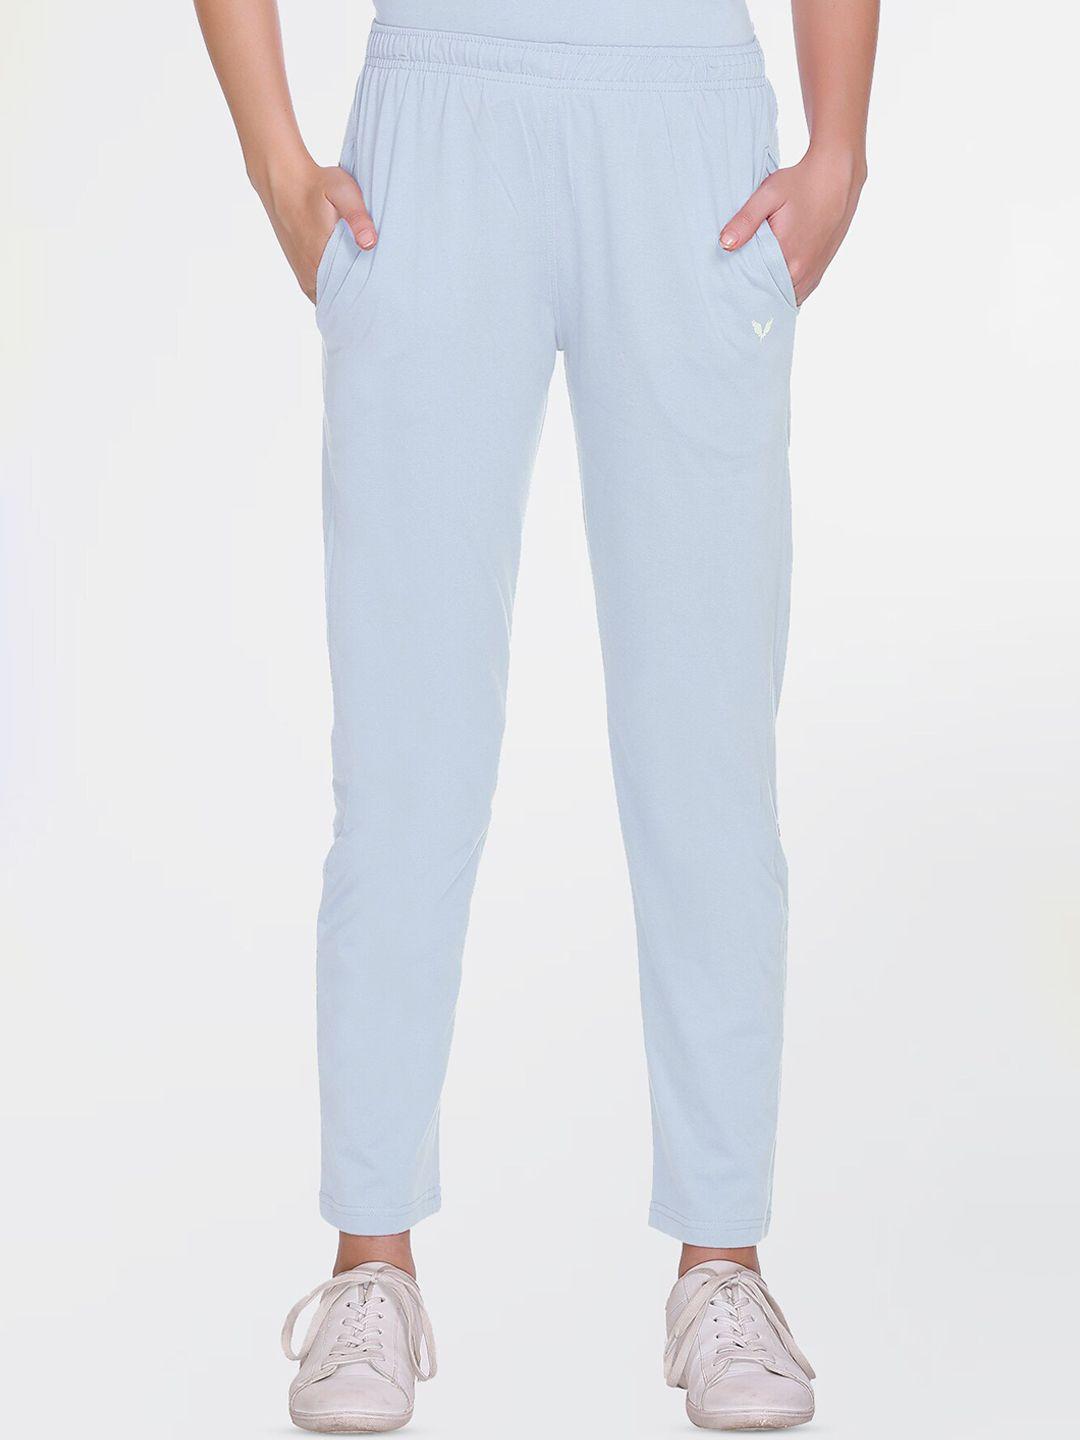 godfrey women slim fit mid-rise cotton track pants